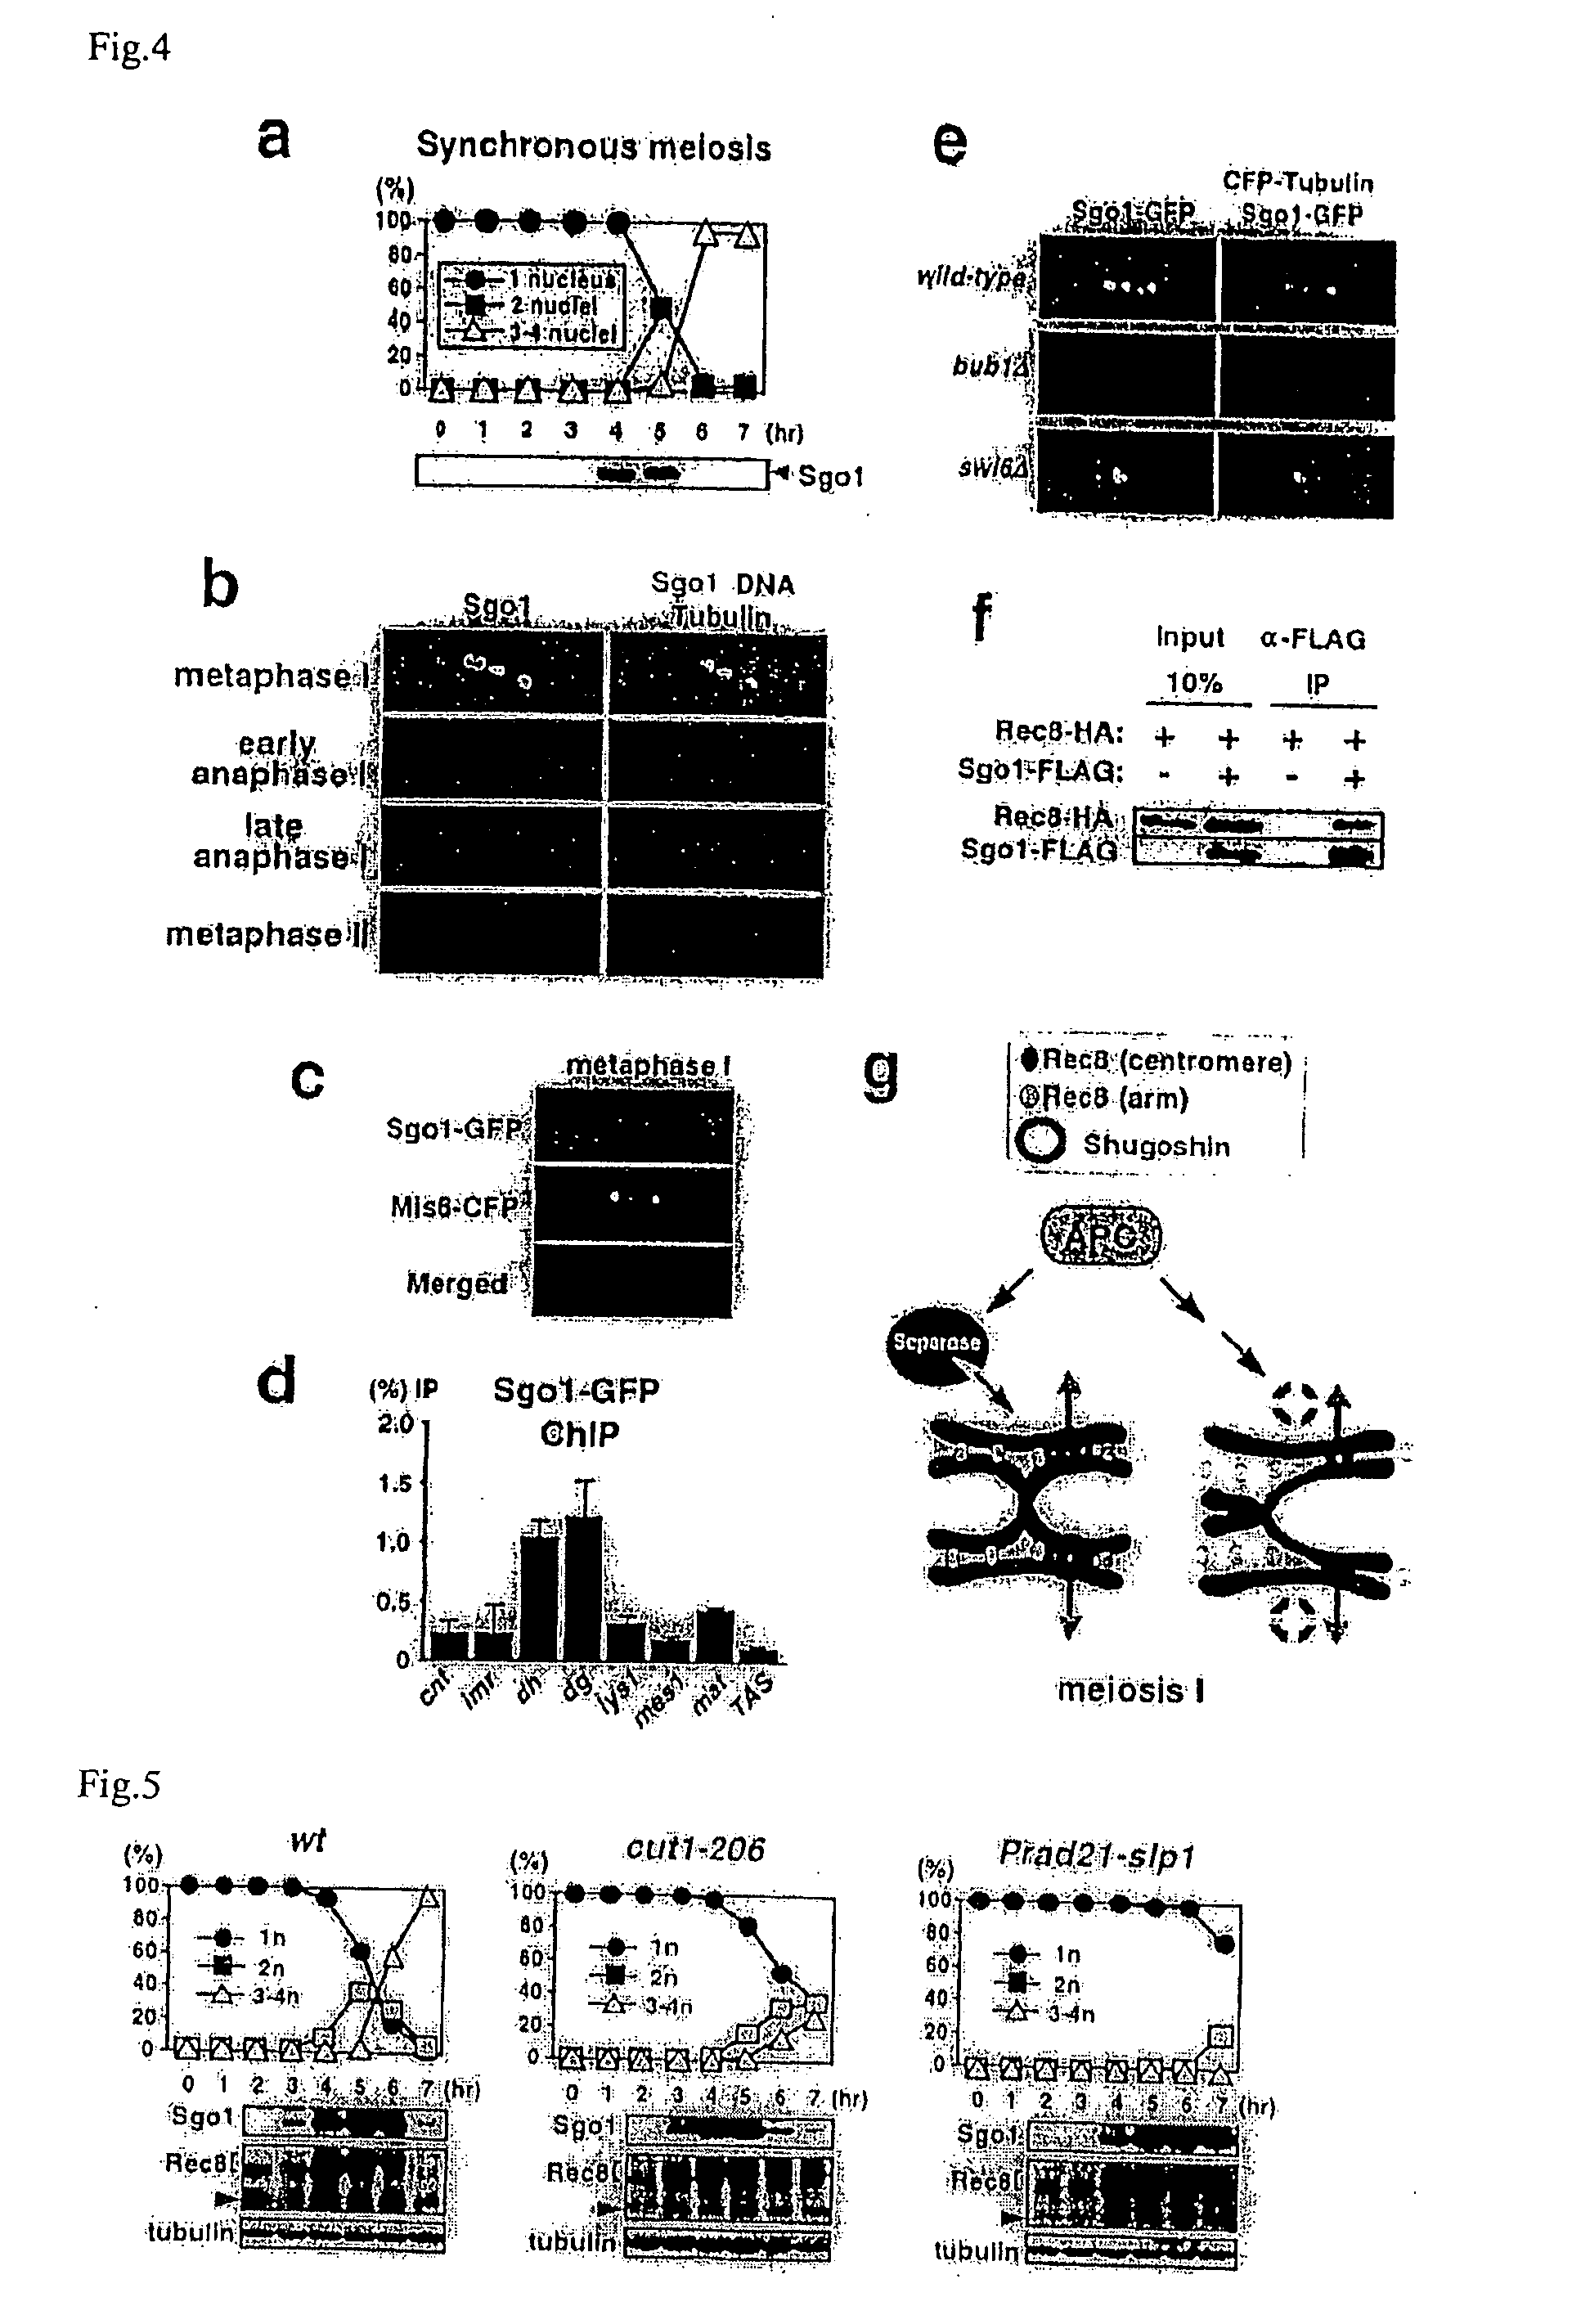 Novel centromeric protein shugoshin